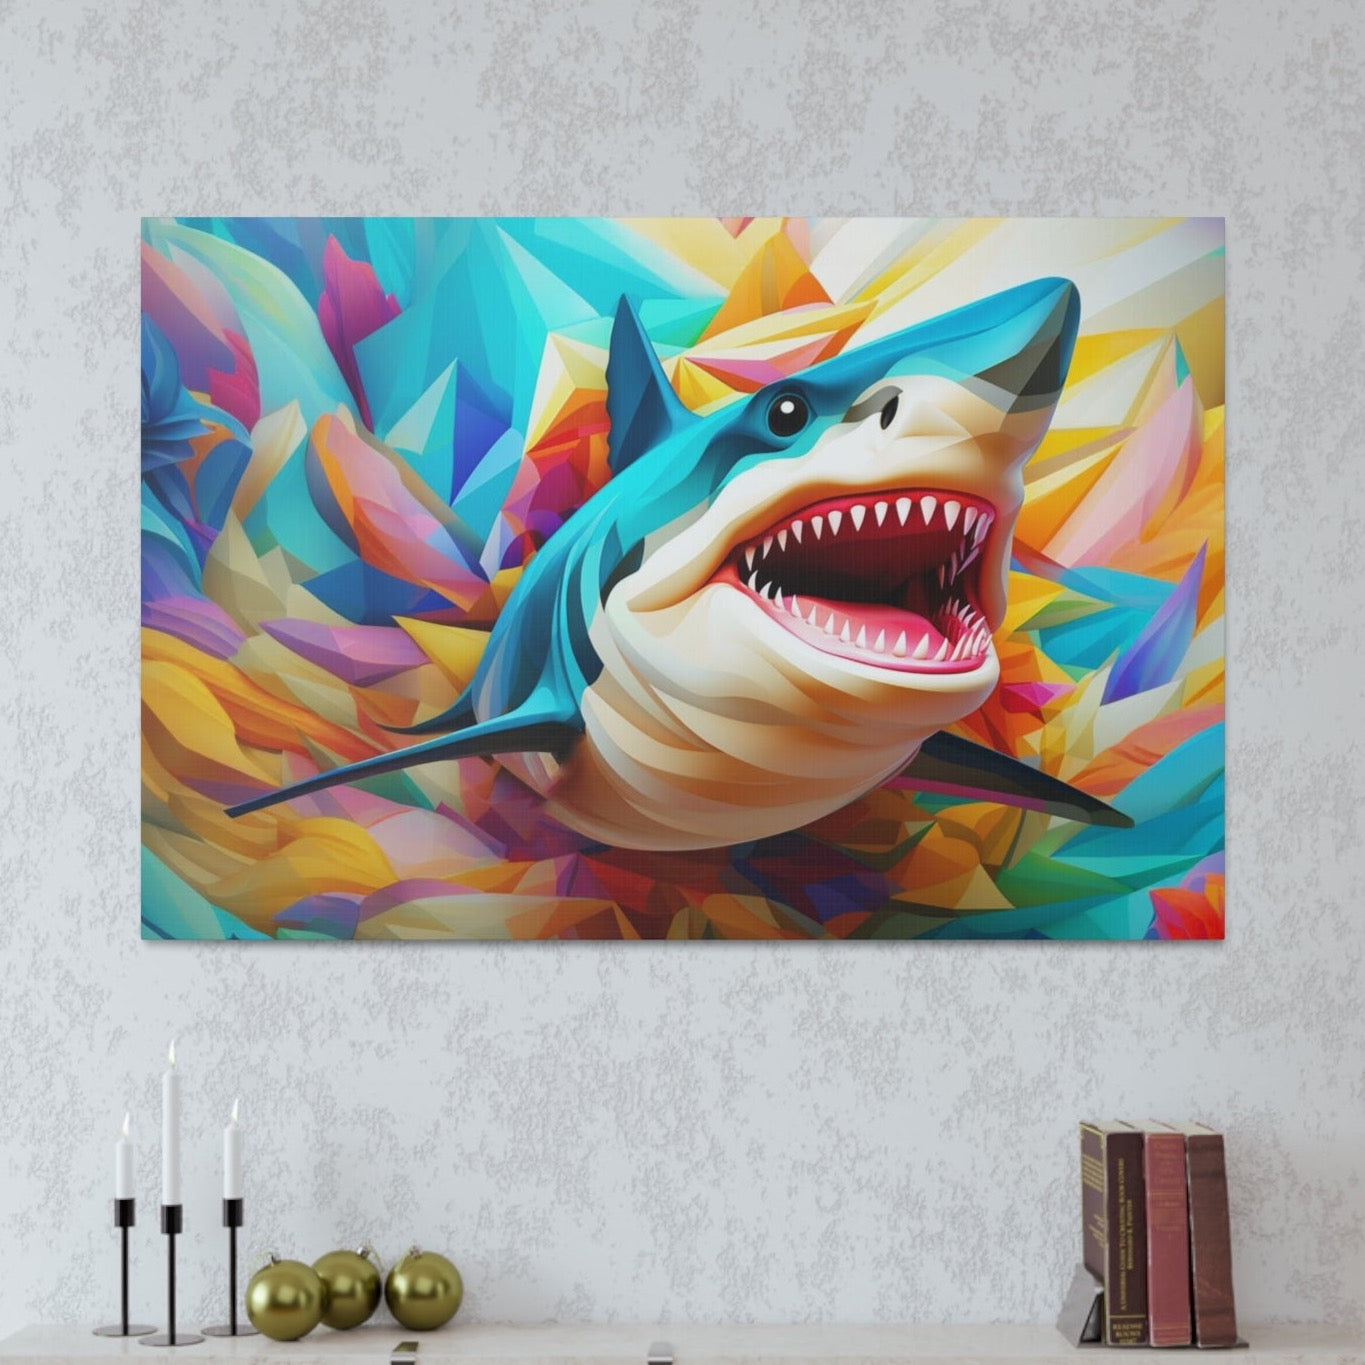 shark wall decor, shark wall decor ideas